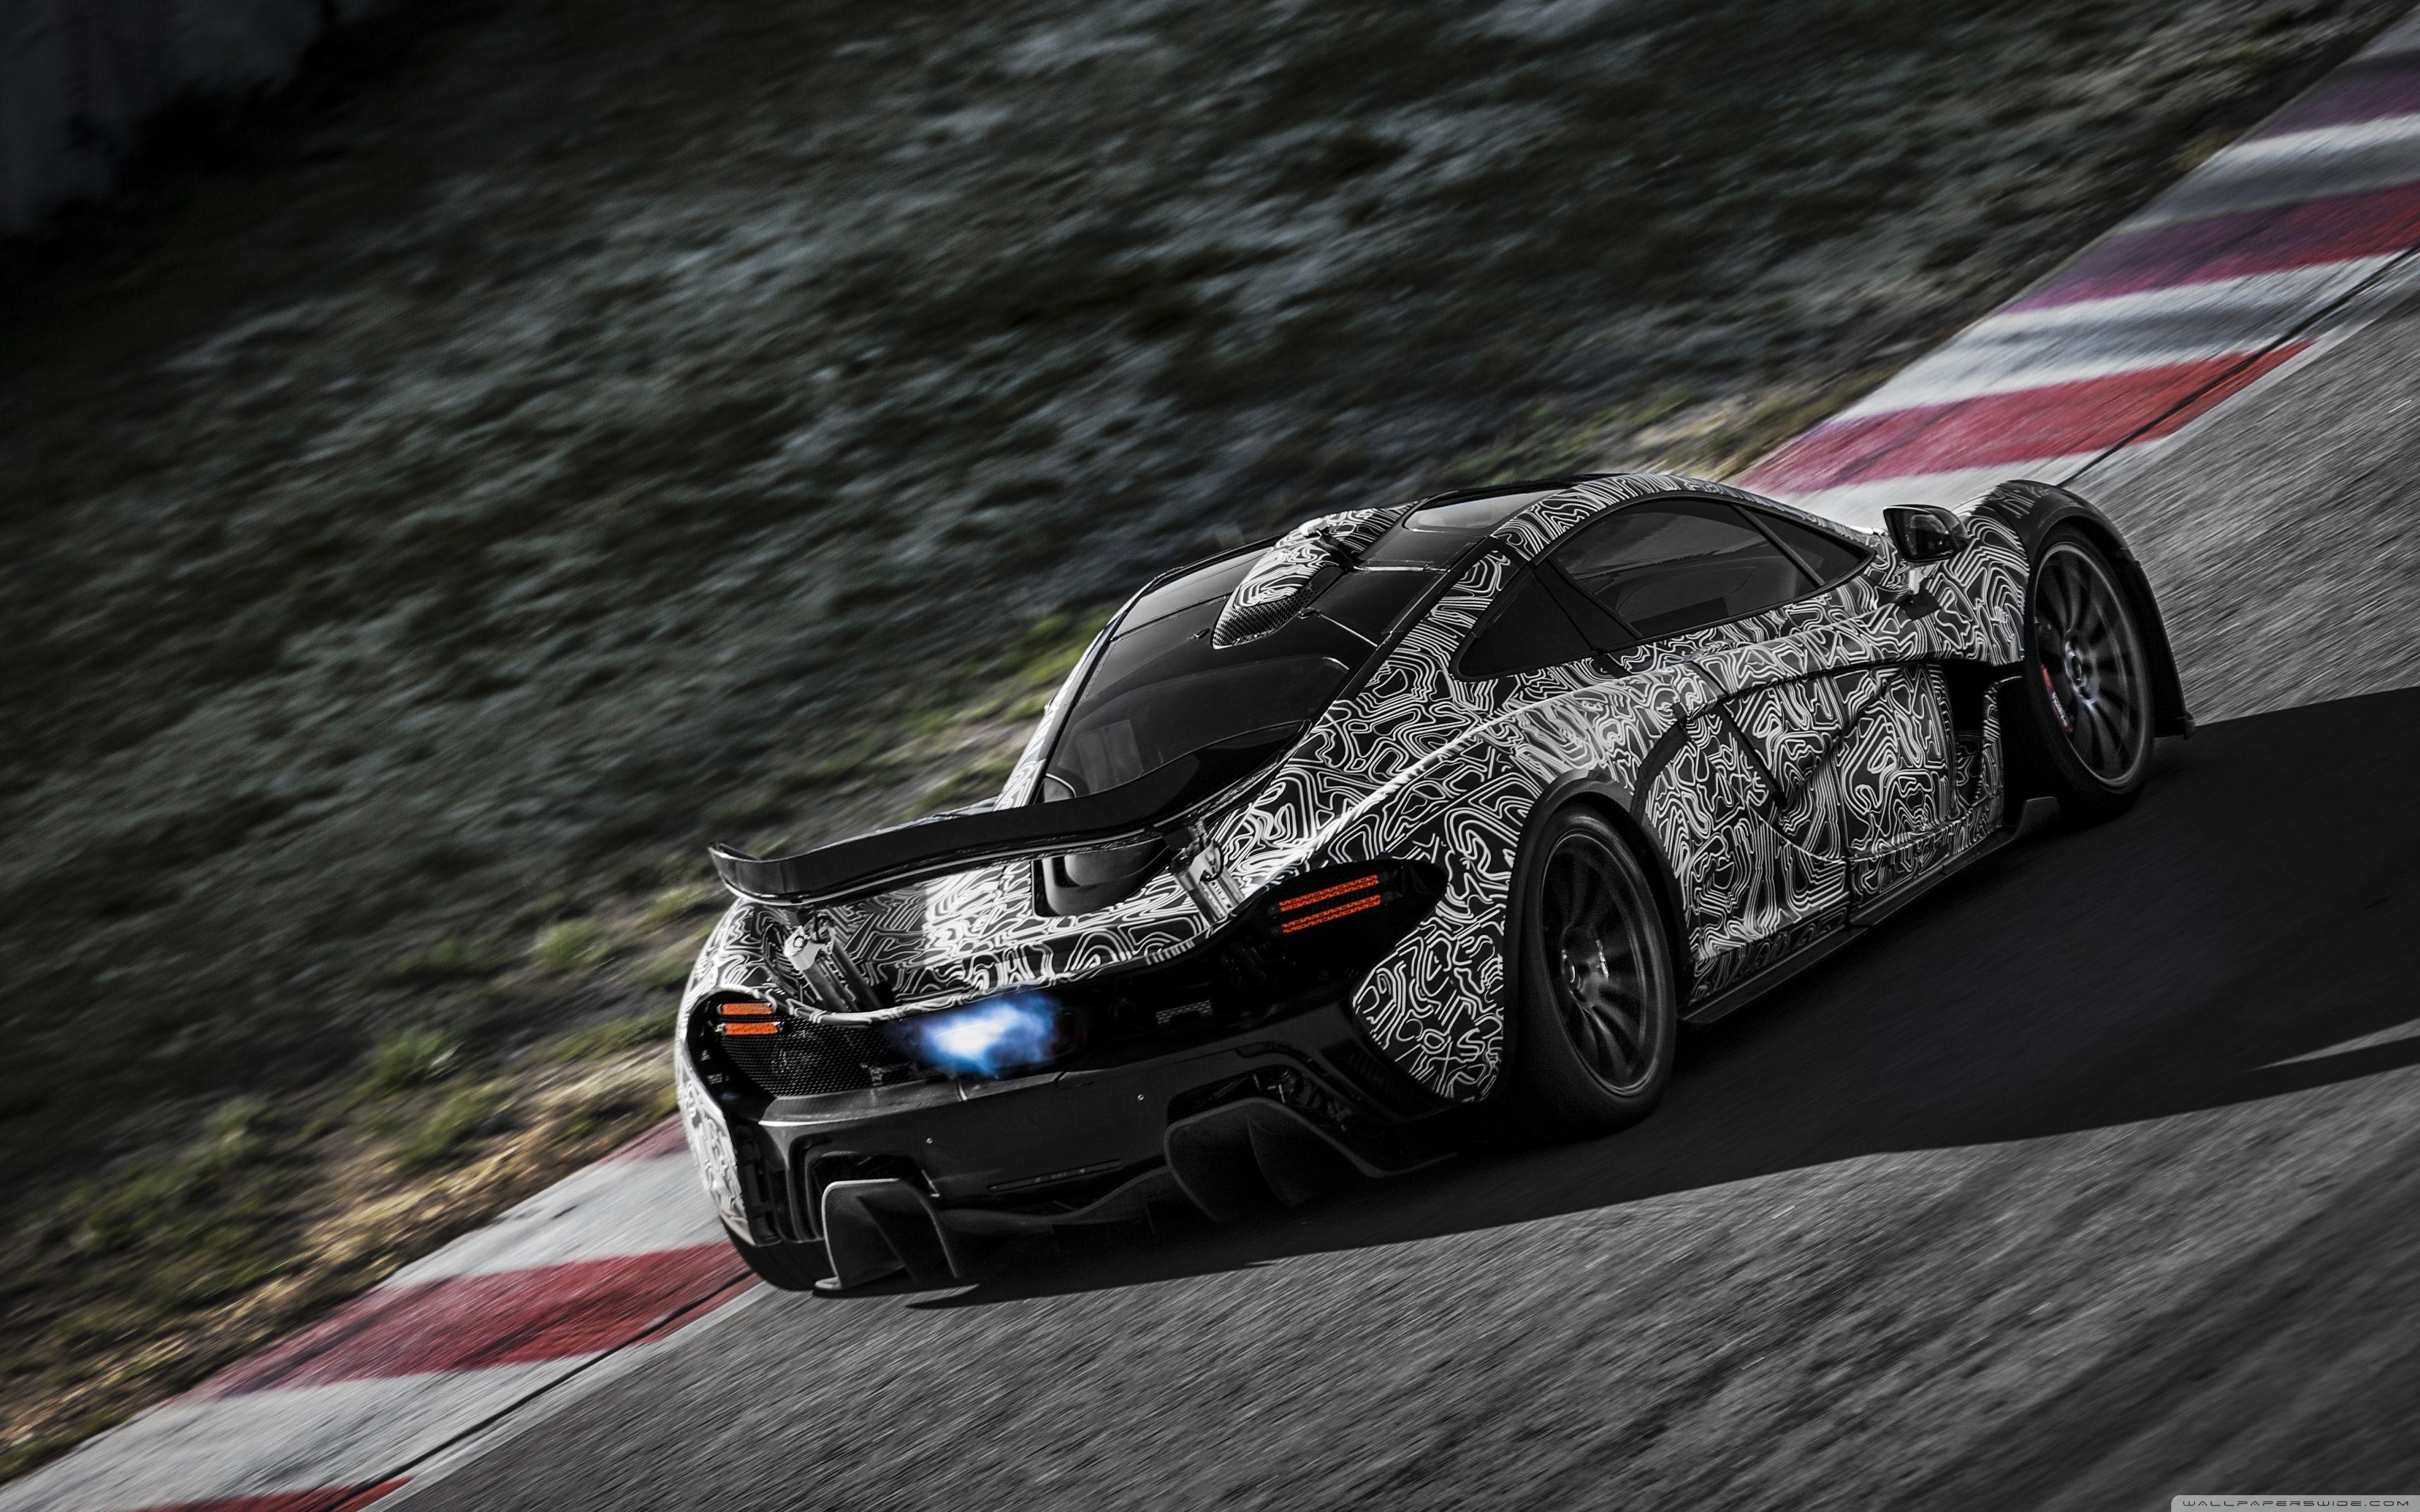 McLaren P1 Car Race ❤ 4K HD Desktop Wallpapers for 4K Ultra HD TV